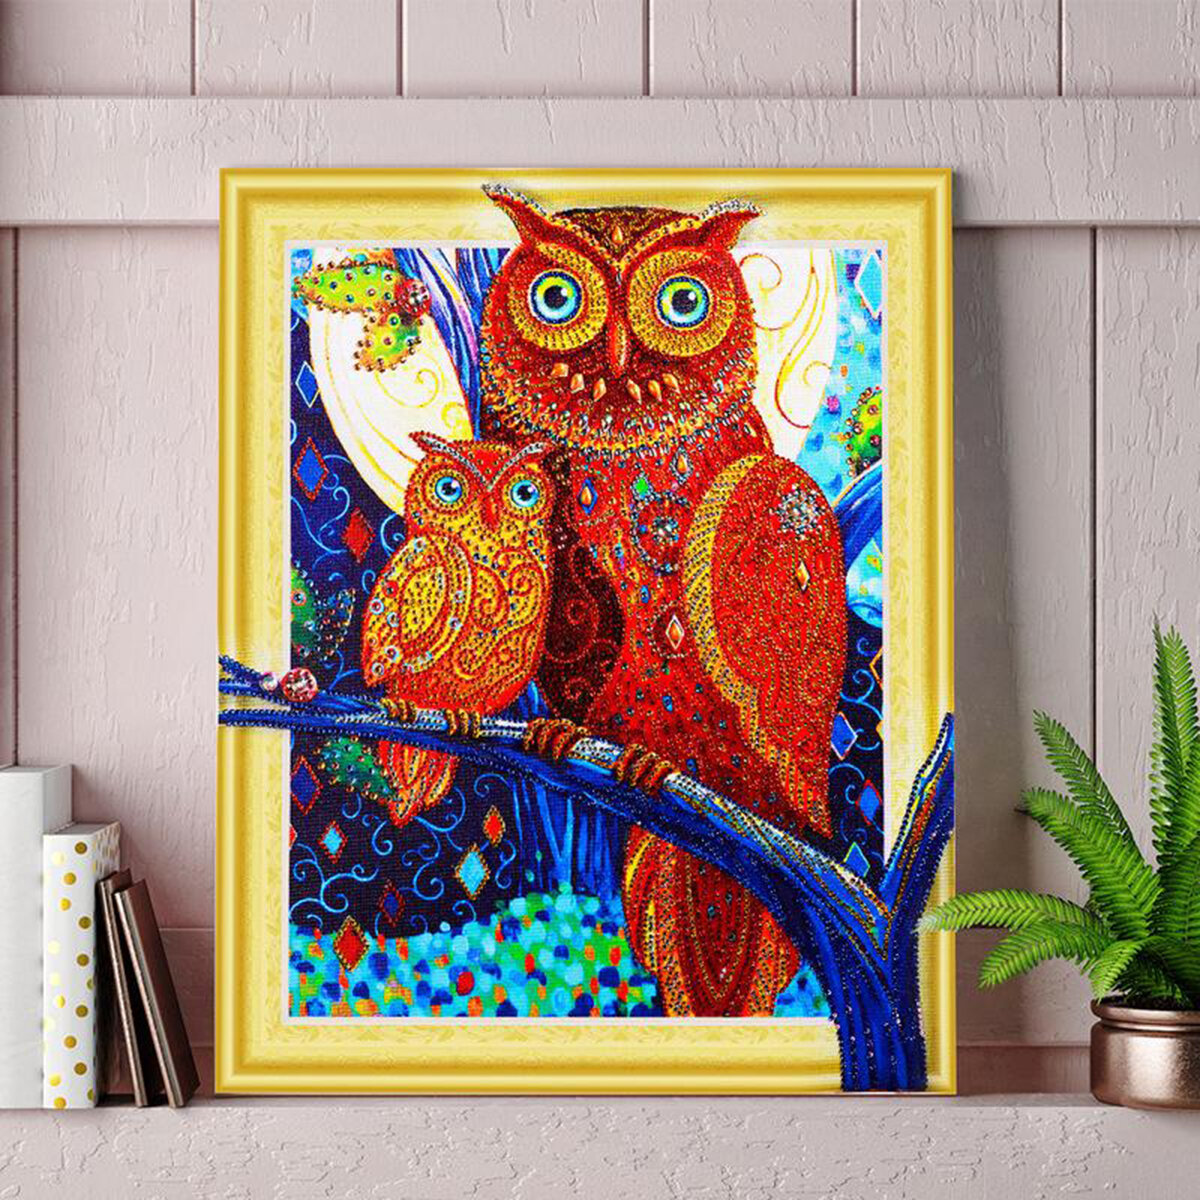 5D Diamond schilderij paard Owl Lion borduurwerk Cross Stitch Kit Home Office decoraties